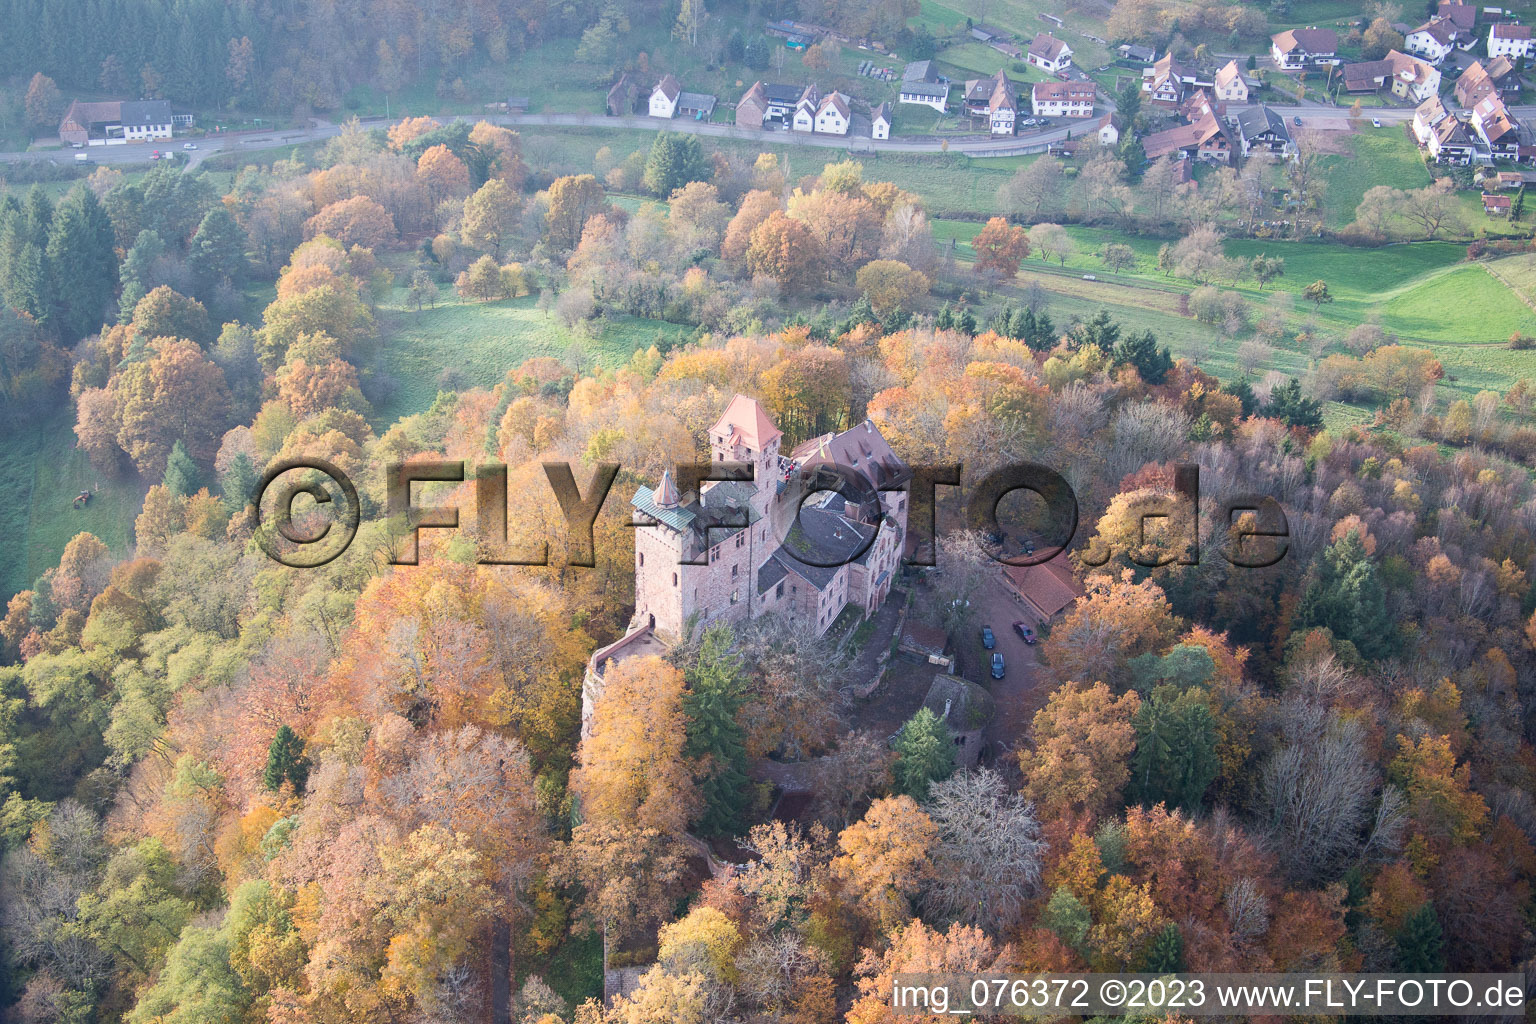 Erlenbach, Berwartstein Castle in Erlenbach bei Dahn in the state Rhineland-Palatinate, Germany seen from above